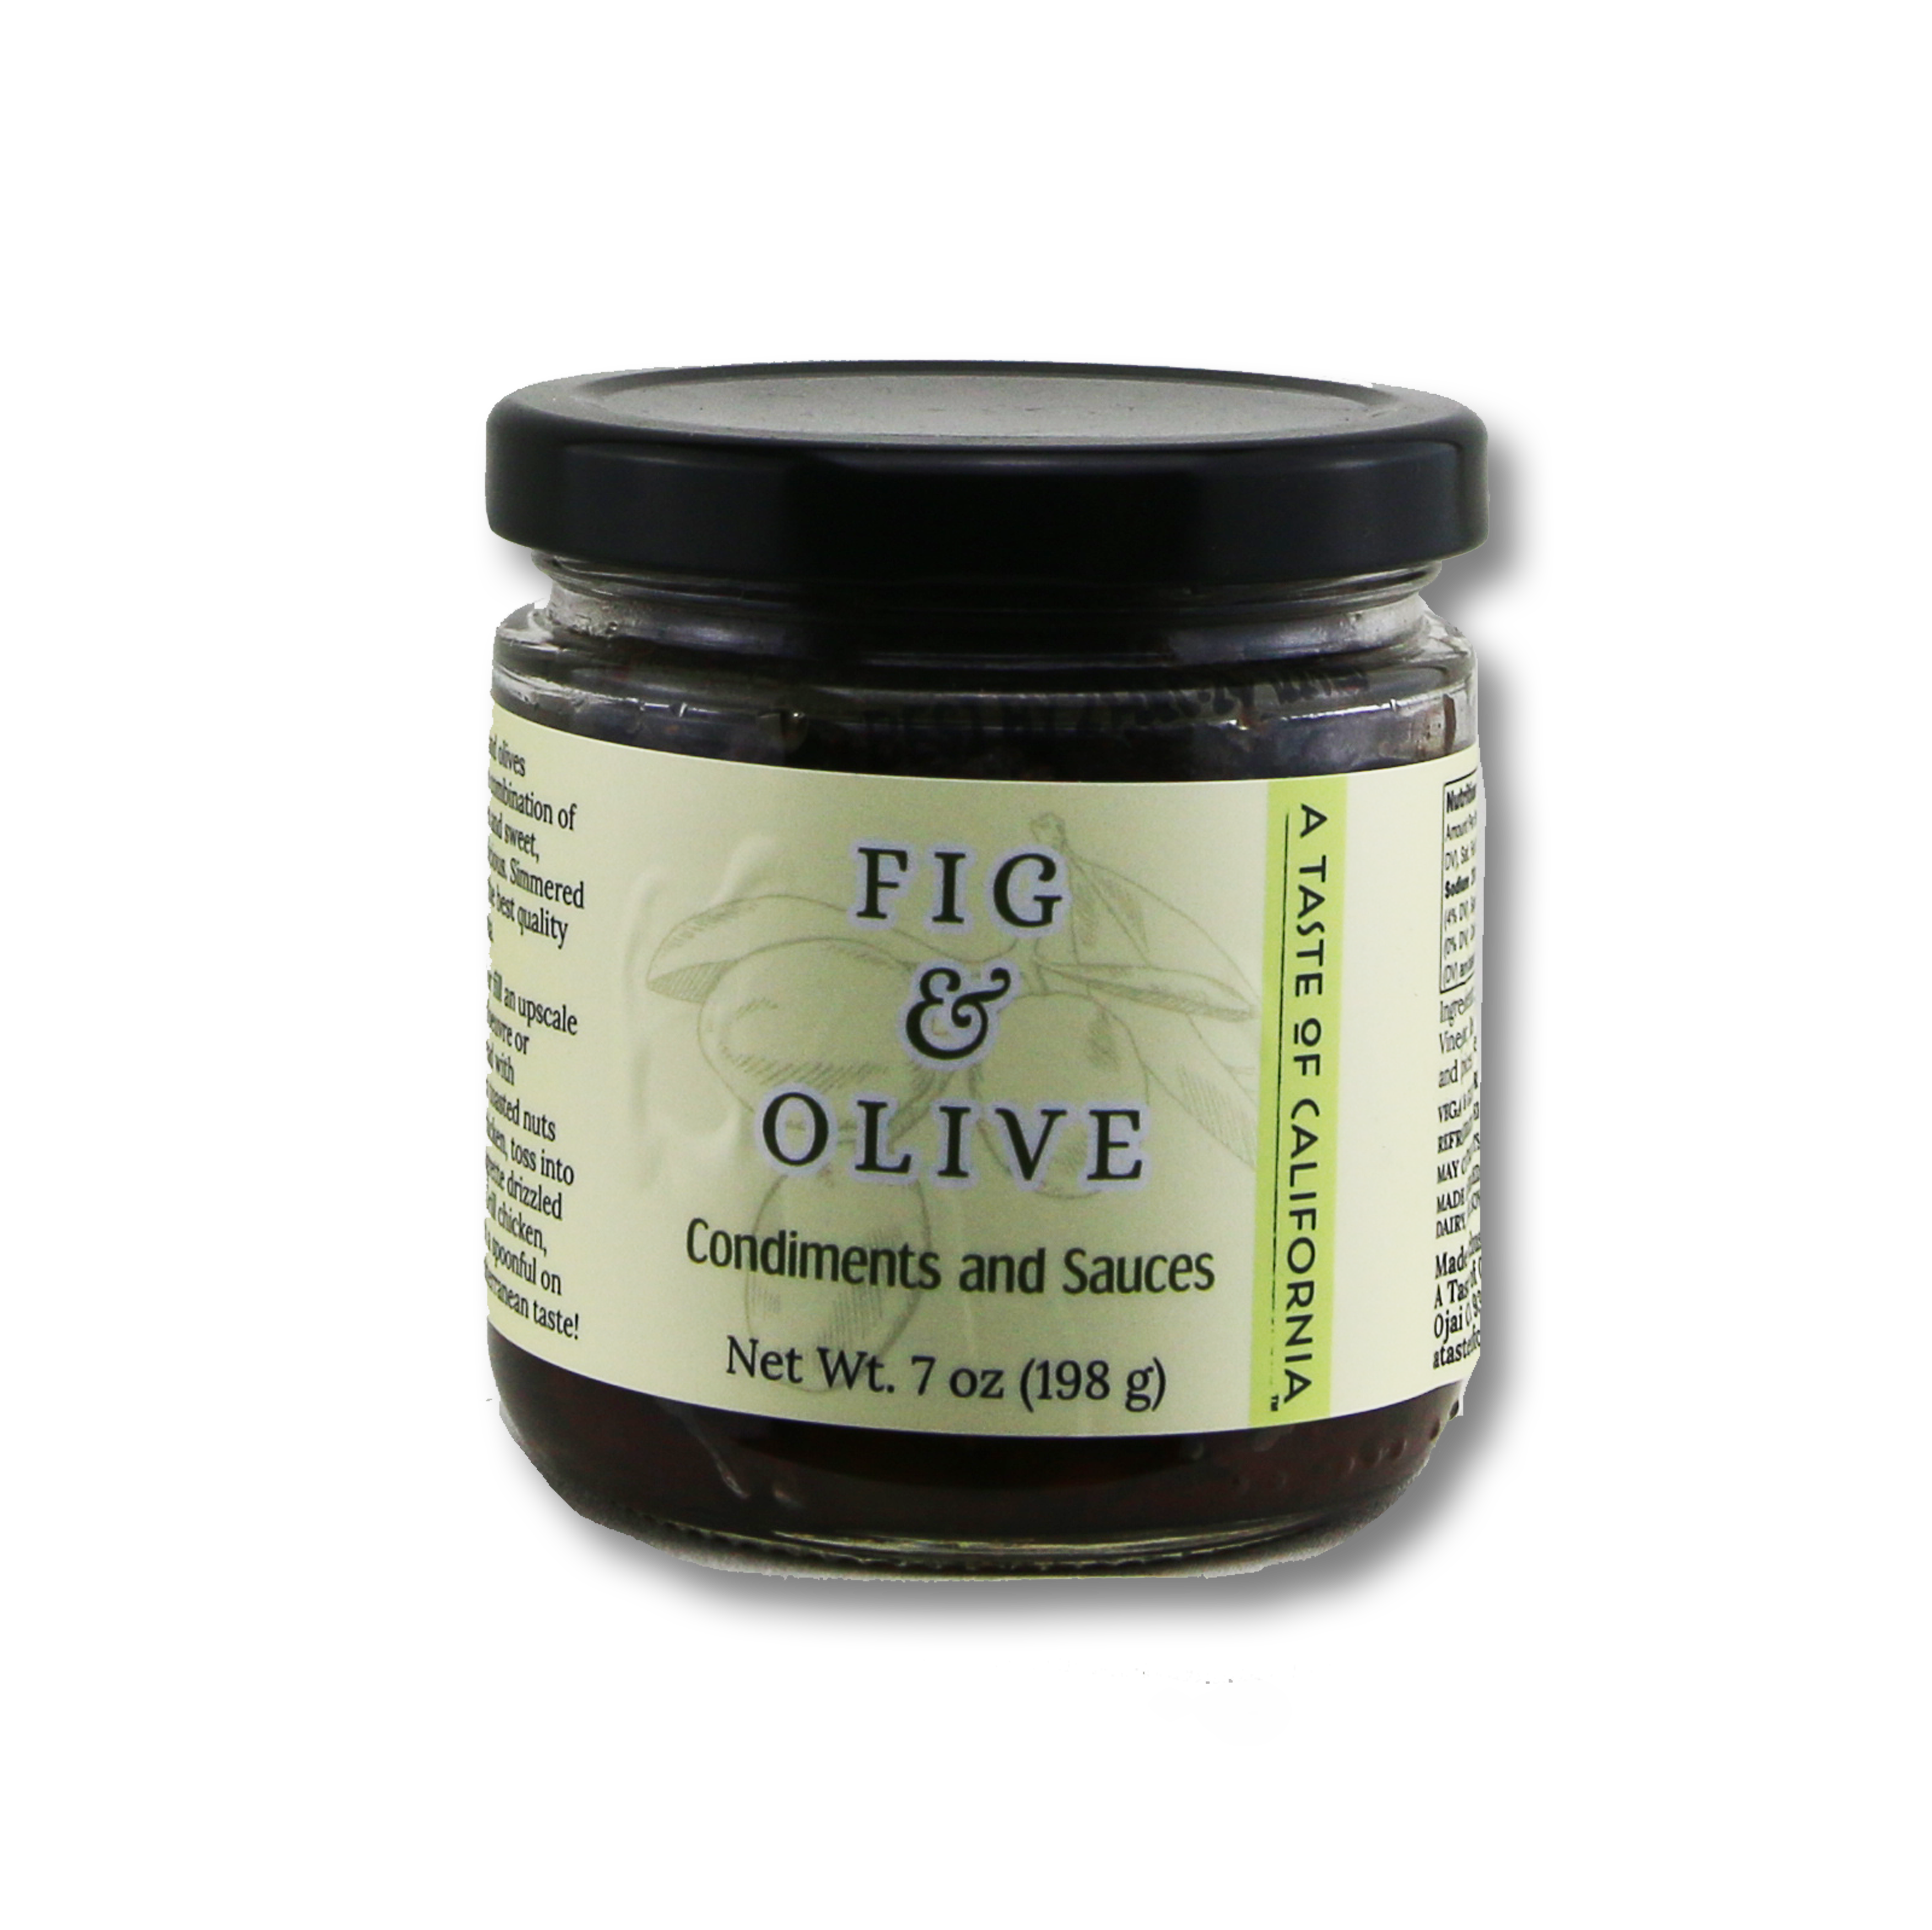 Fig & Olive Tapenade